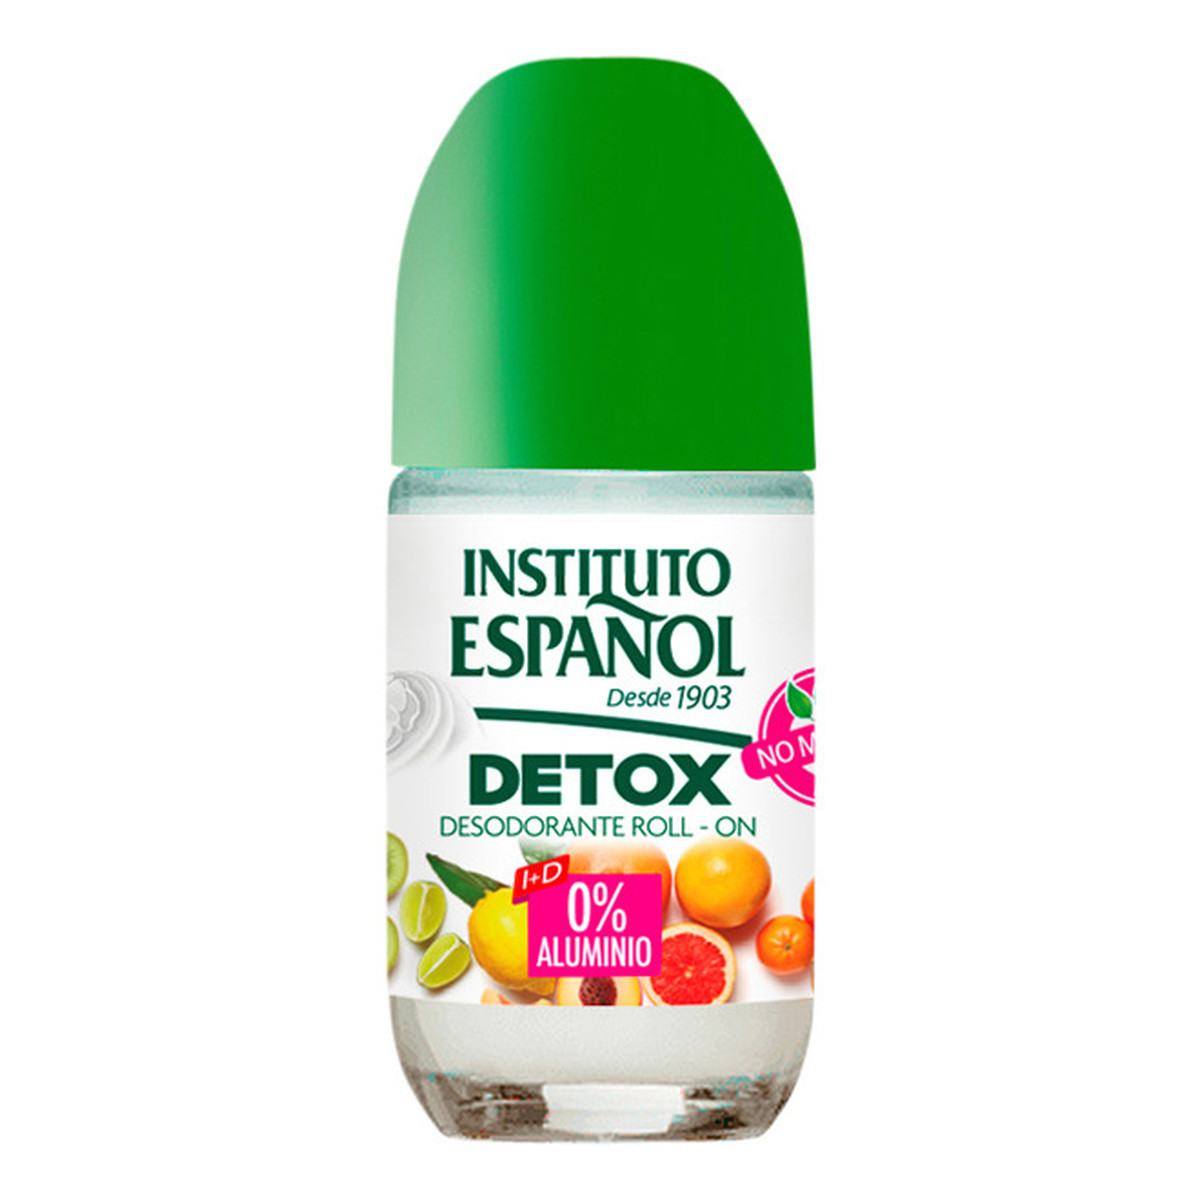 Instituto Espanol Detox dezodorant w kulce 75ml